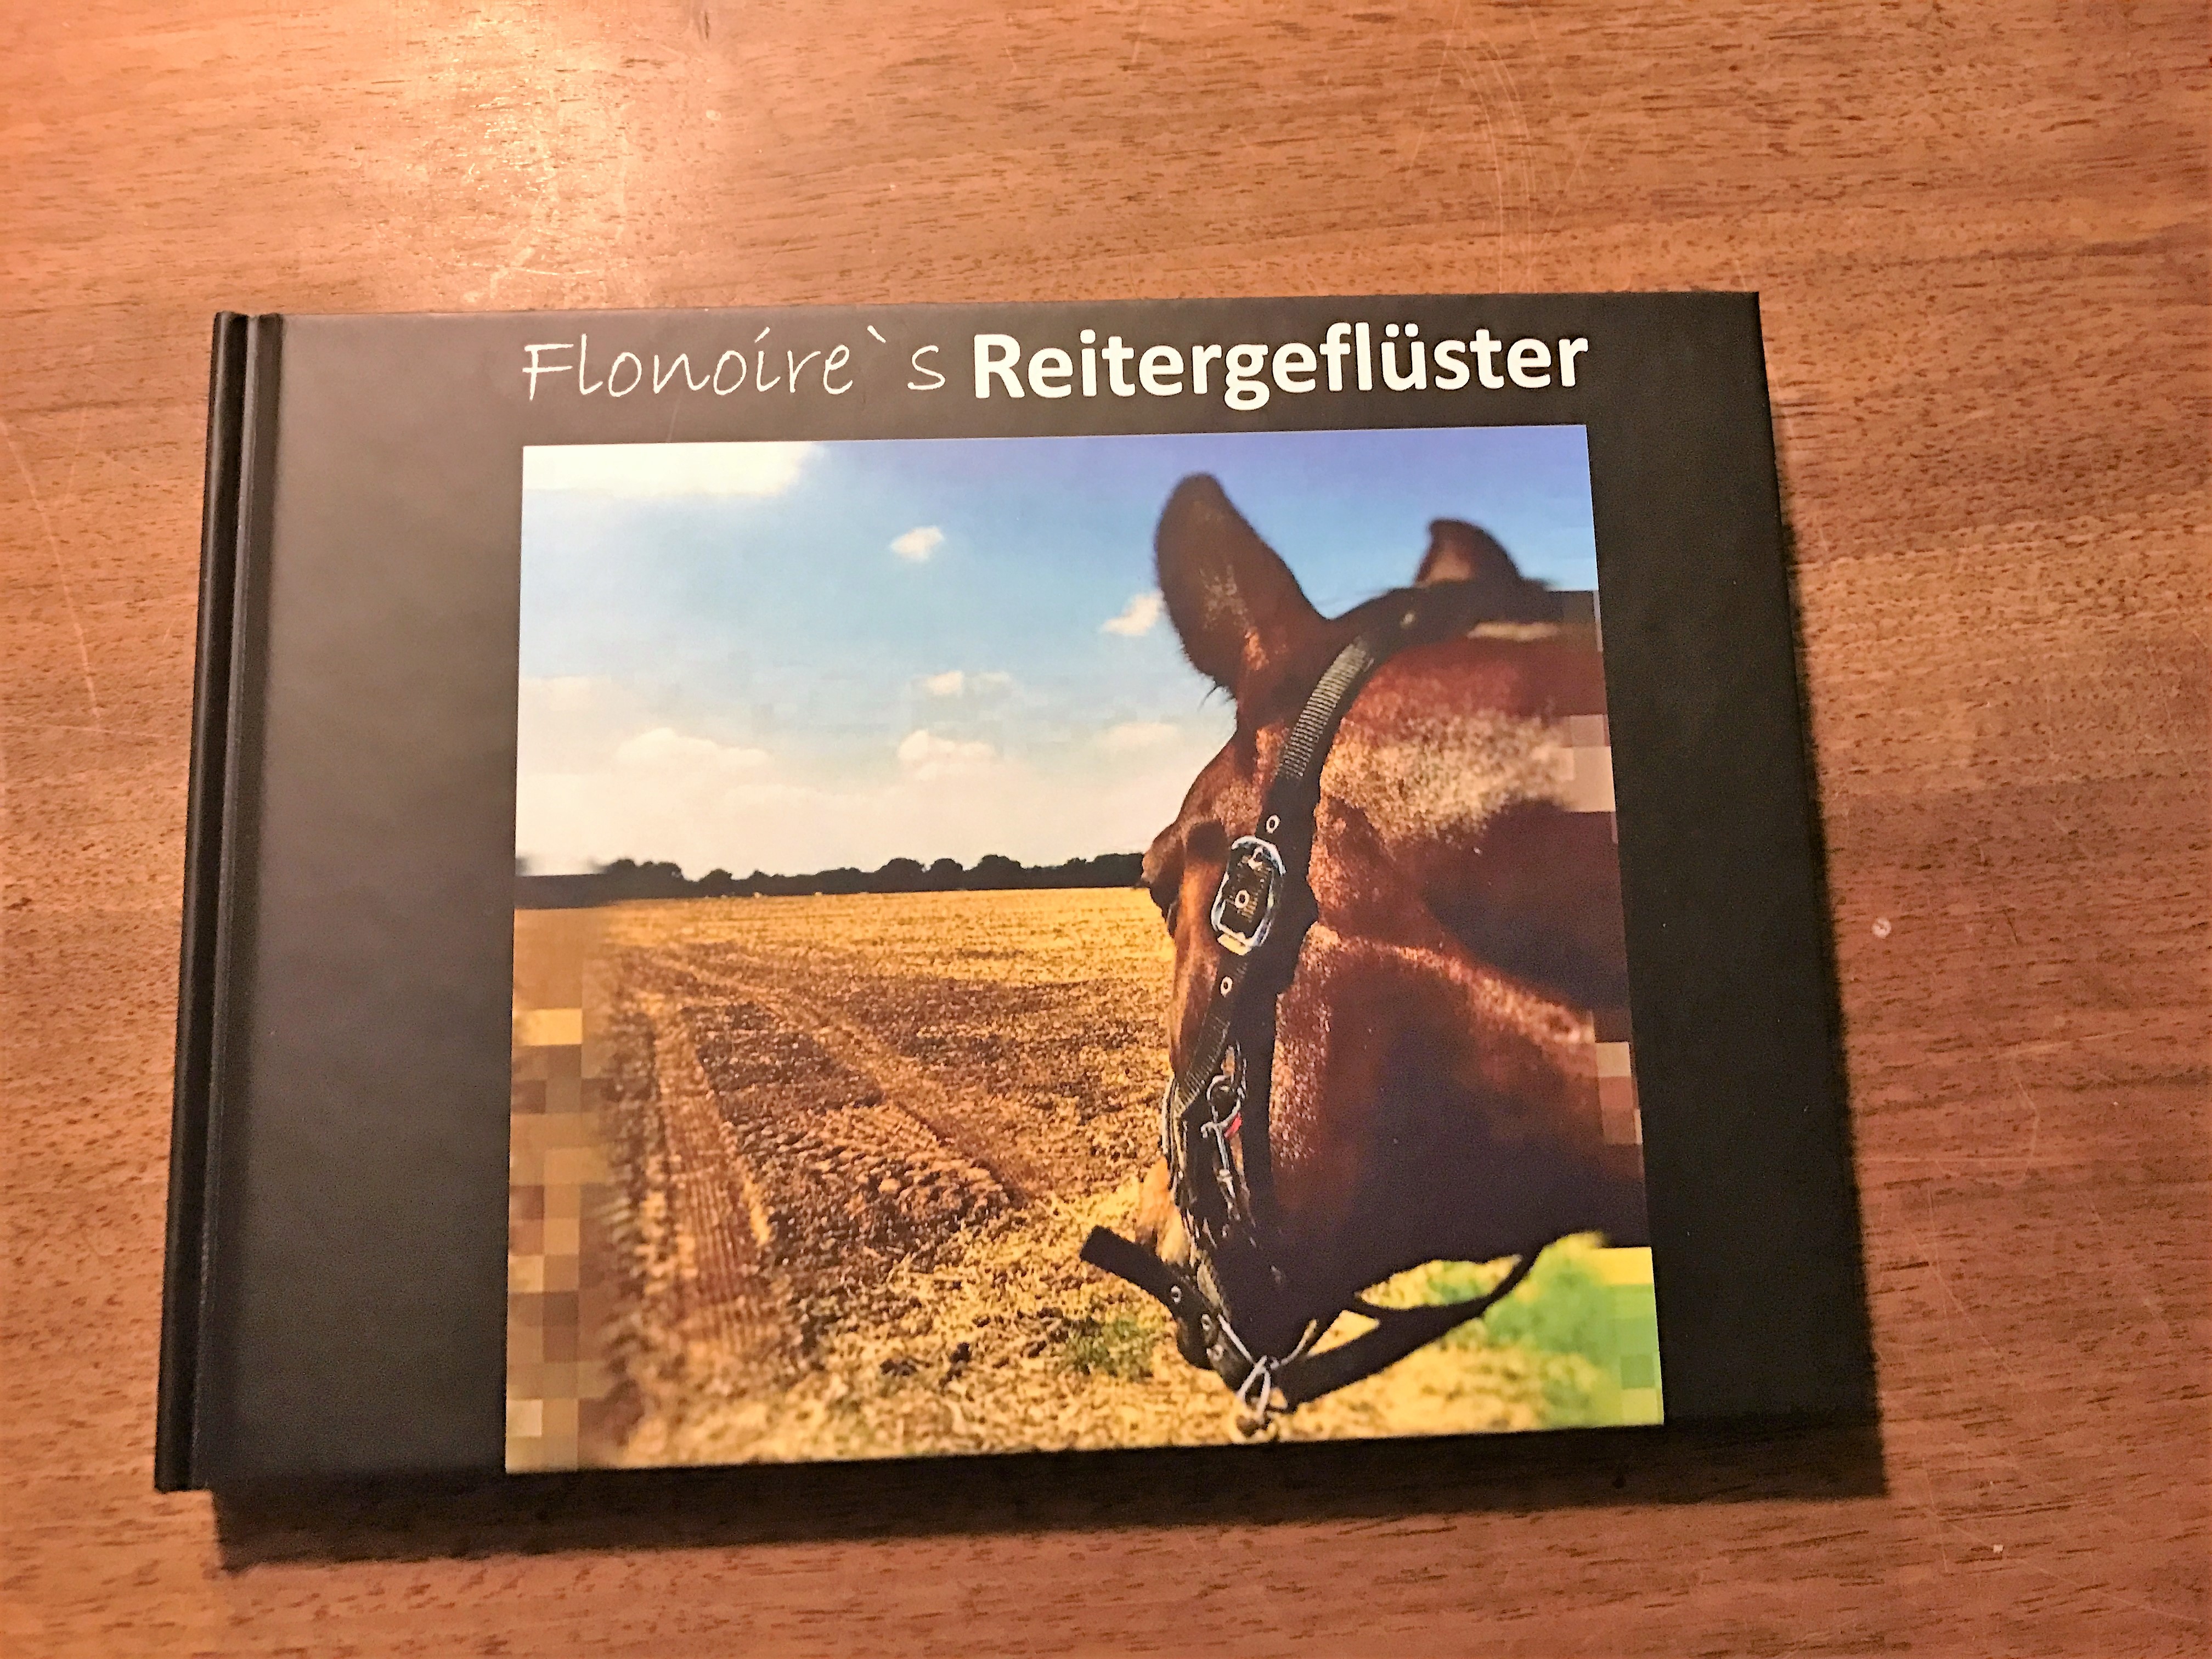 Black Edition, personalisiert, mit Pferdenamen "Flonoire"